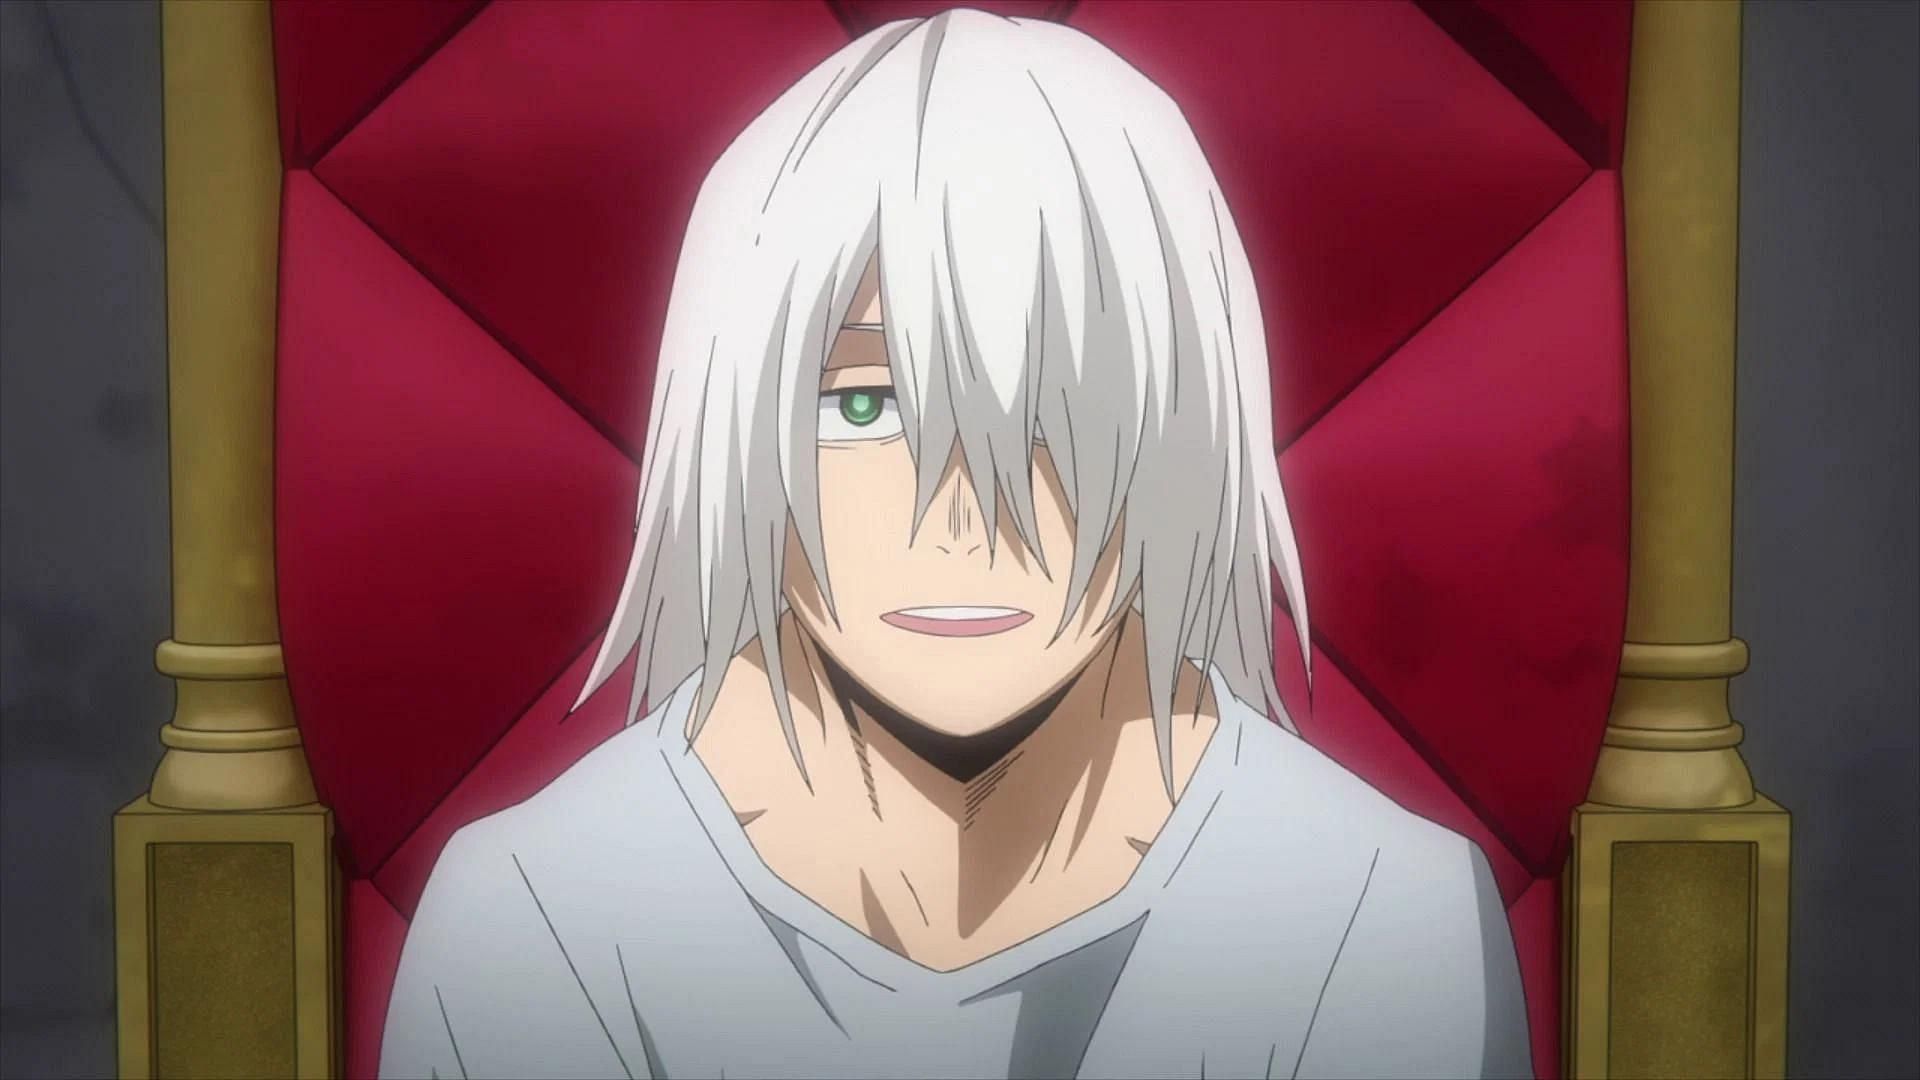 Yoichi as shown in the anime (Image via Studio Bones)